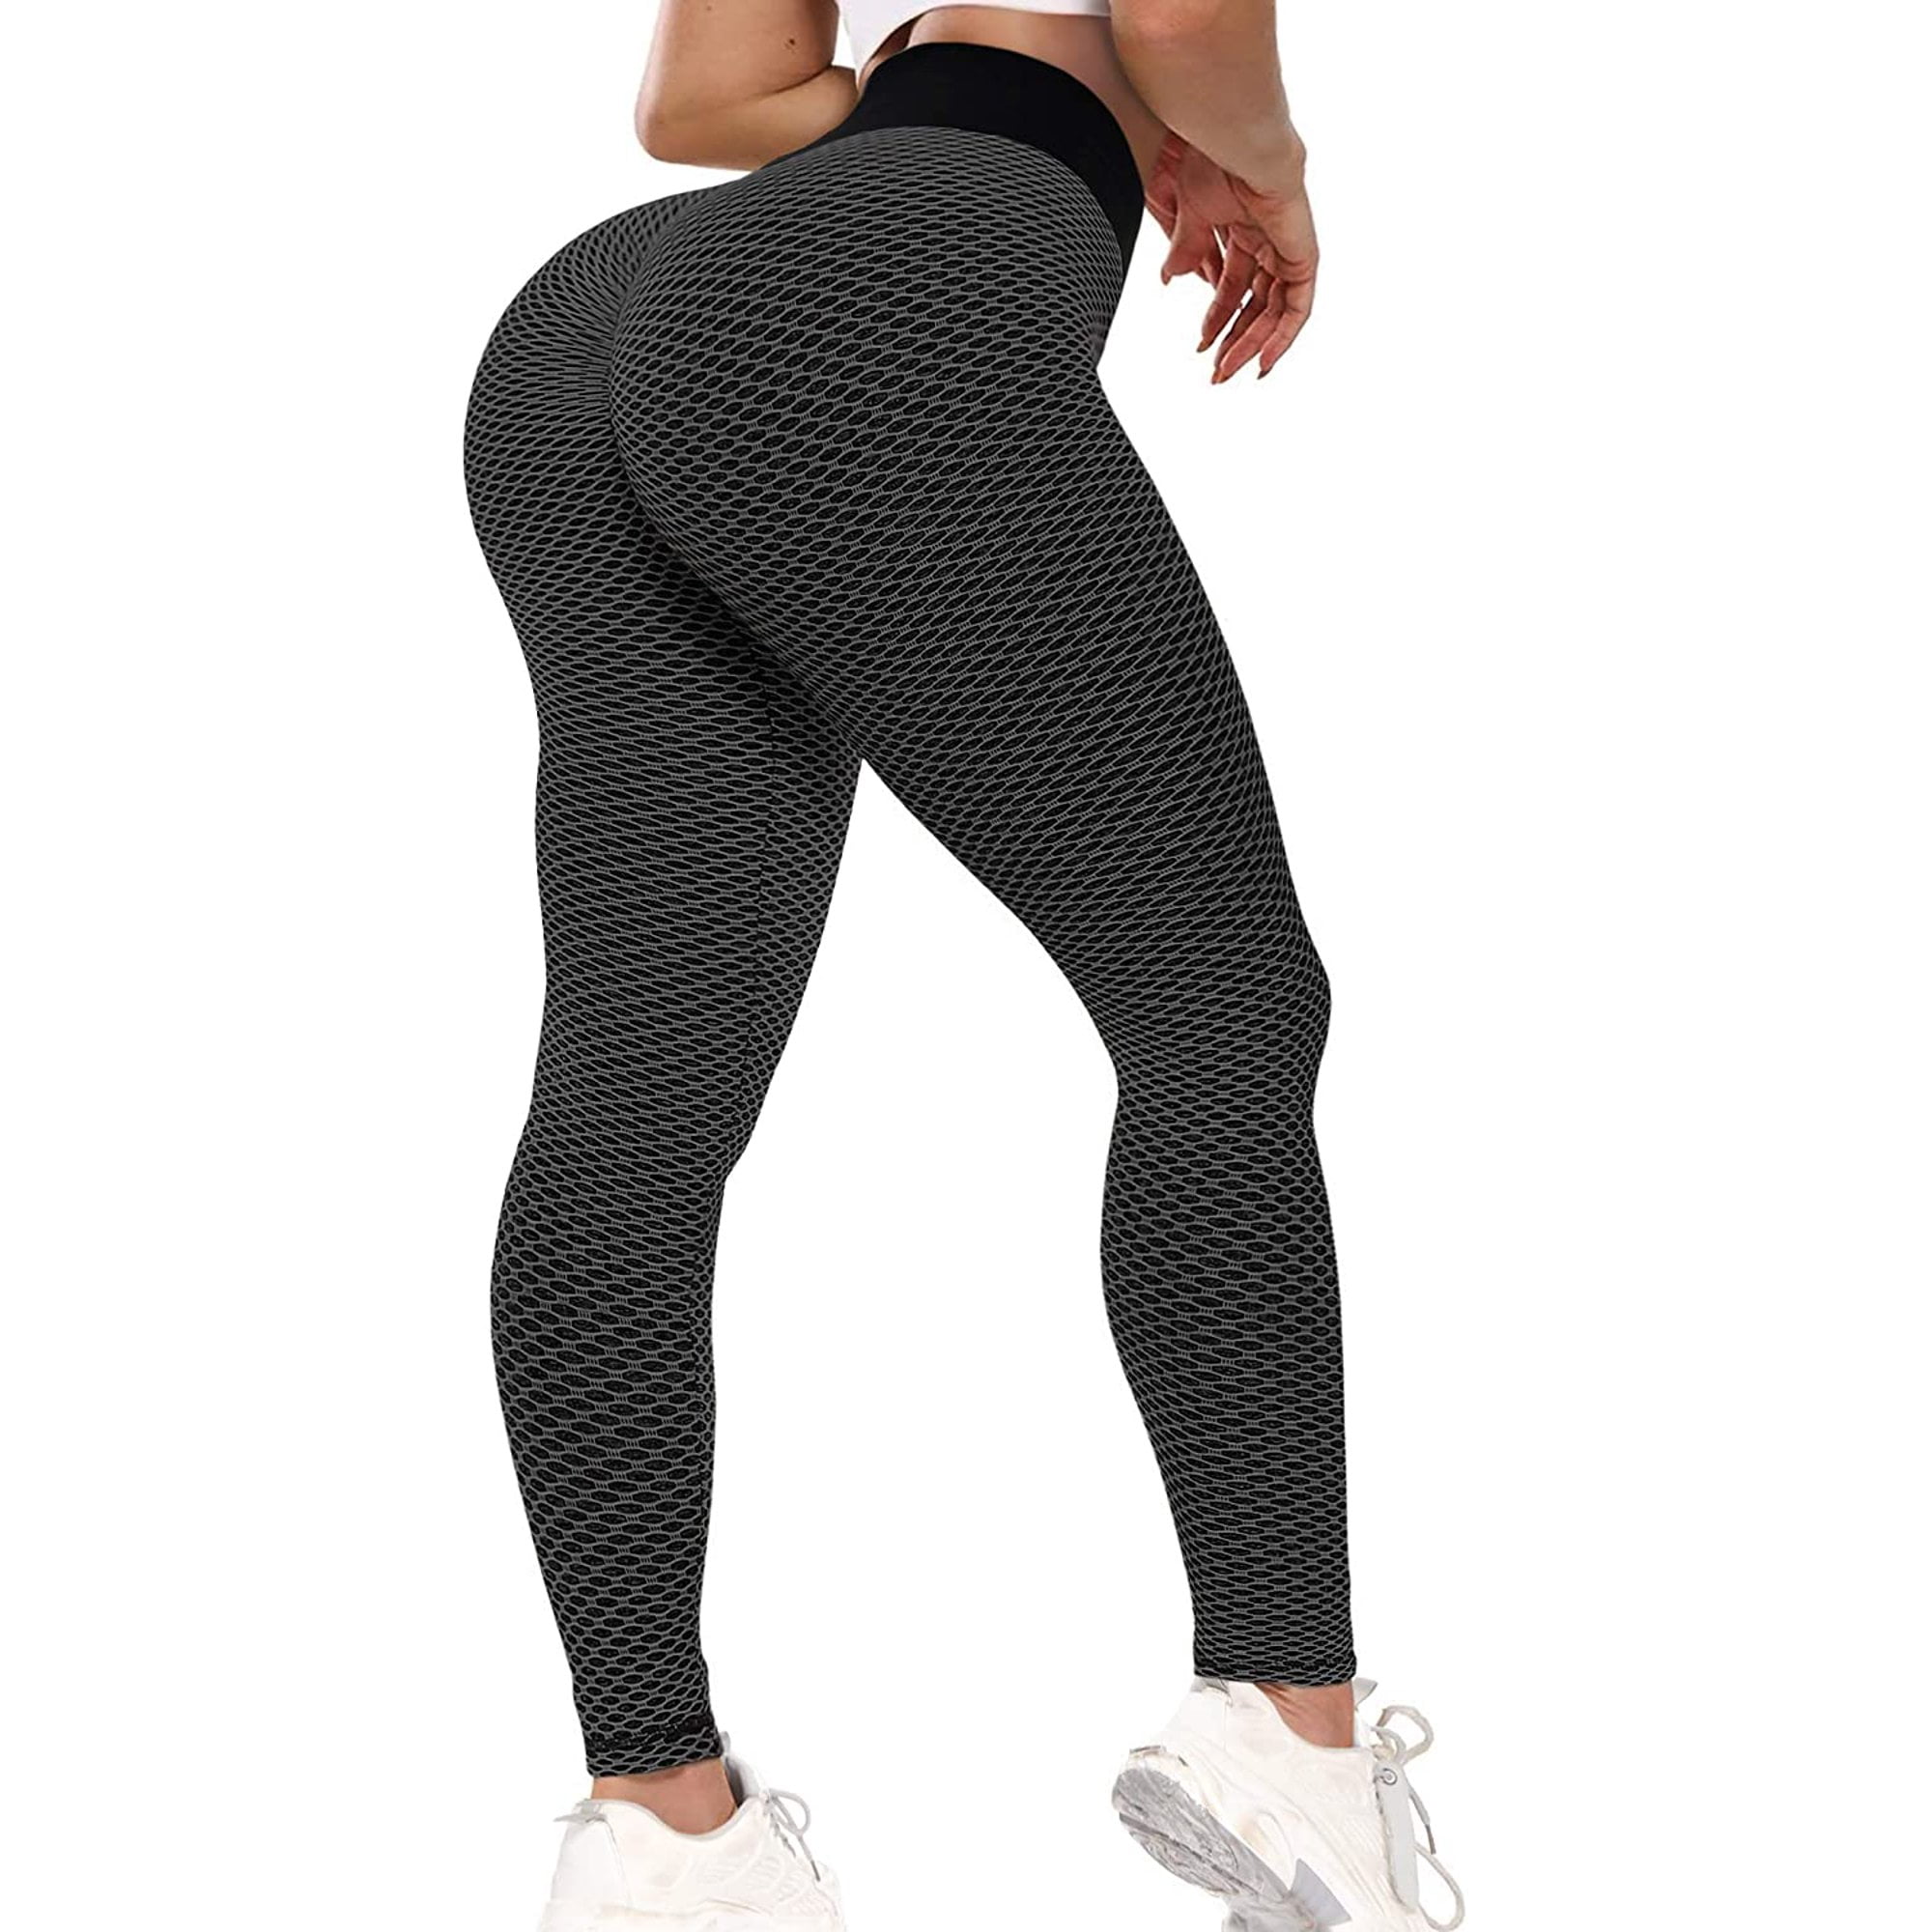 Mesh High Waist Yoga Leggings Non See-through Tummy Control Black 4 Way  Stretch Butt Lift Athletic Gym Yoga Pants For Women - Pants & Capris -  AliExpress